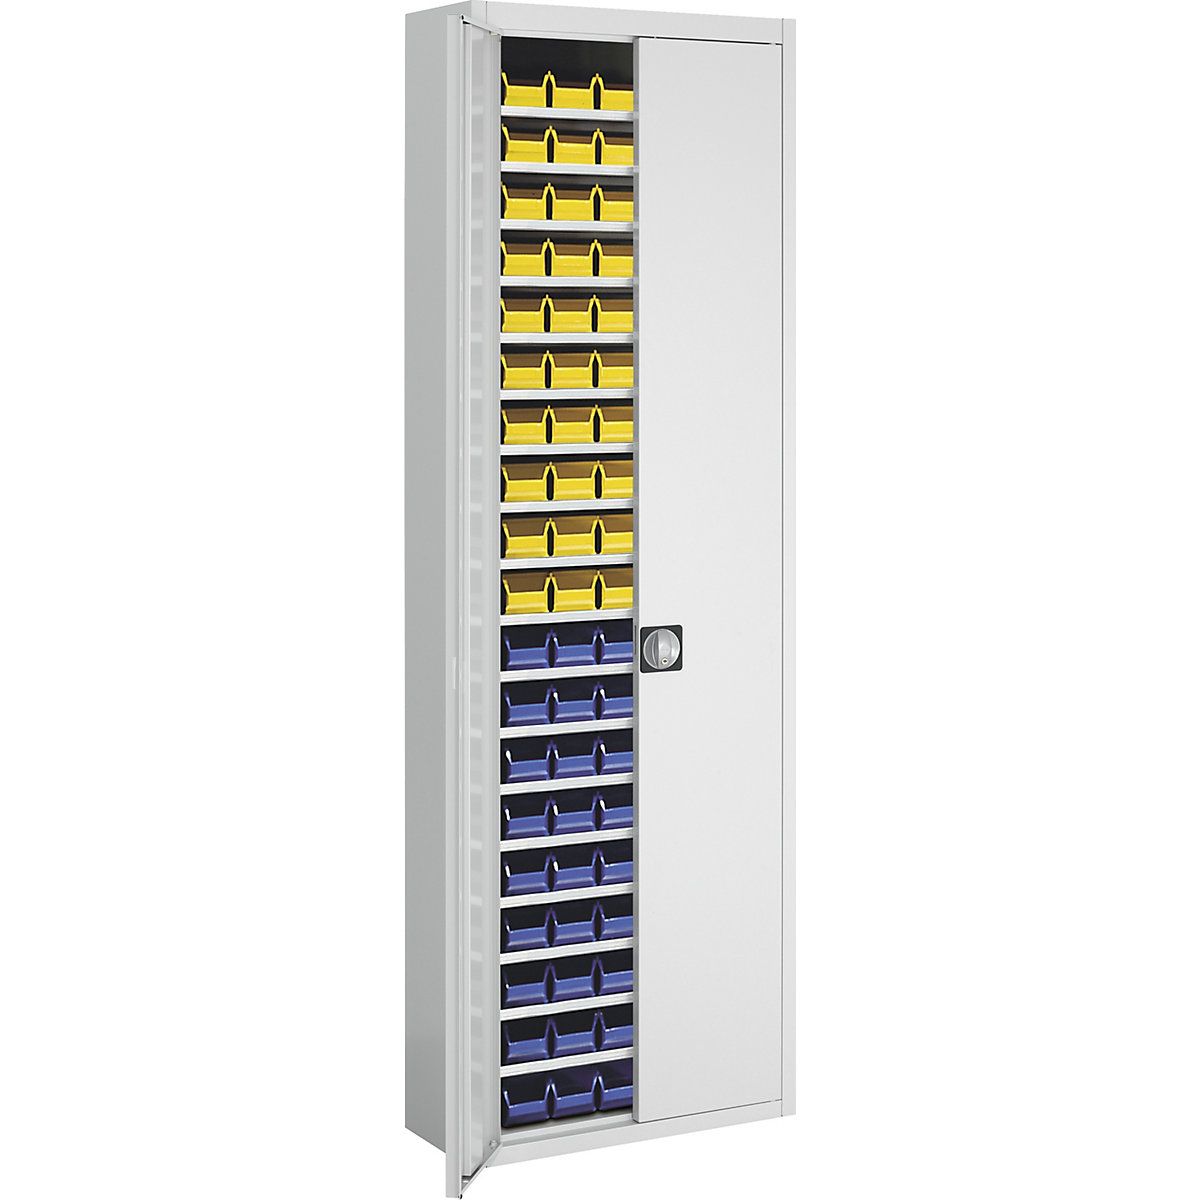 Storage cupboard with open fronted storage bins – mauser, HxWxD 2150 x 680 x 280 mm, single colour, grey, 114 bins-9